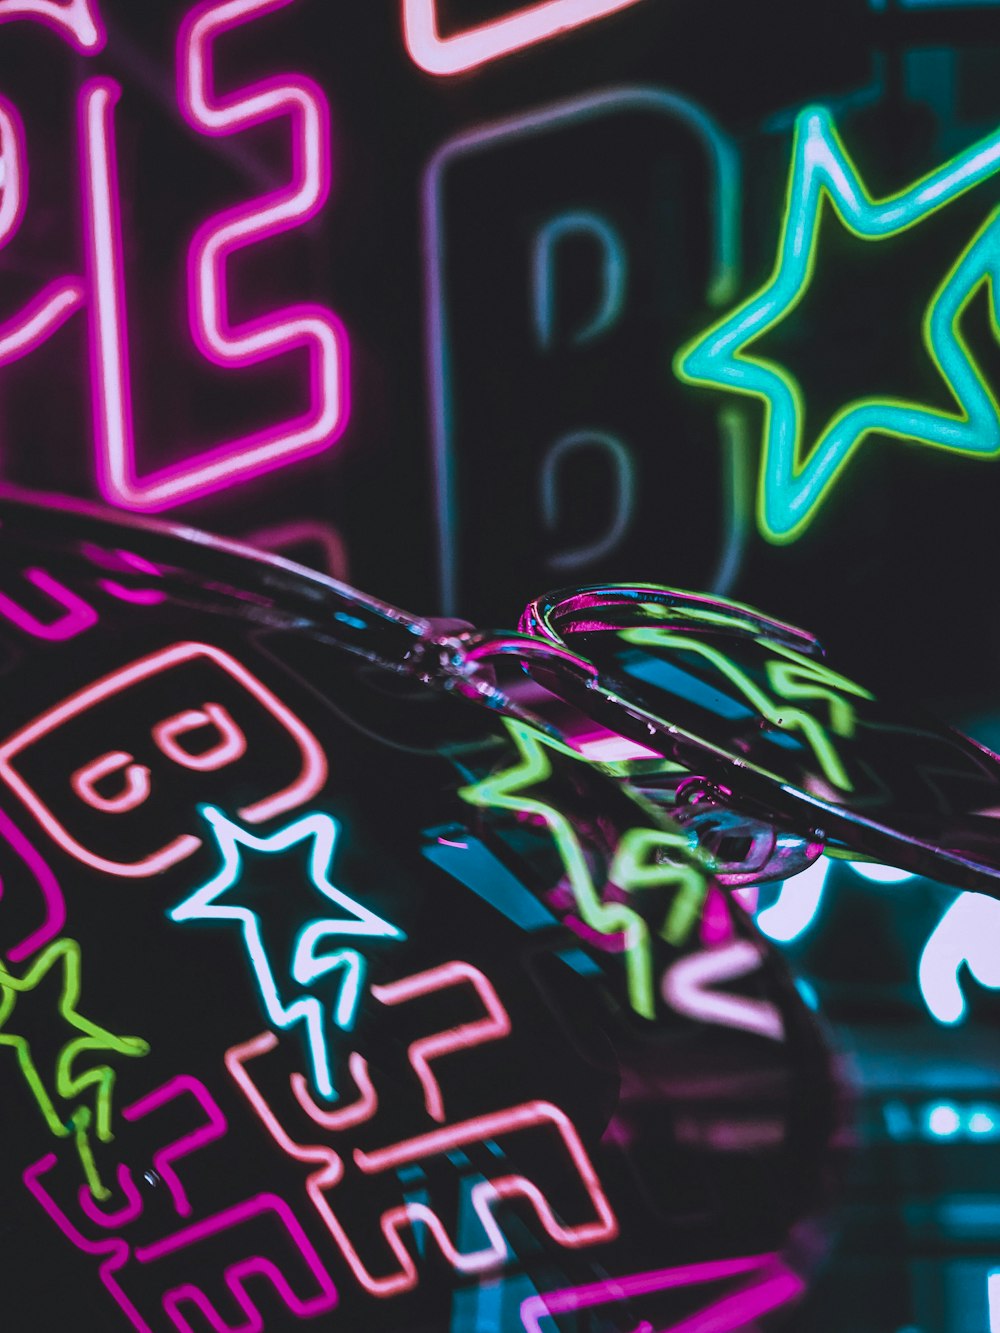 Bape neon logo wallpaper photo – Free Pattern Image on Unsplash